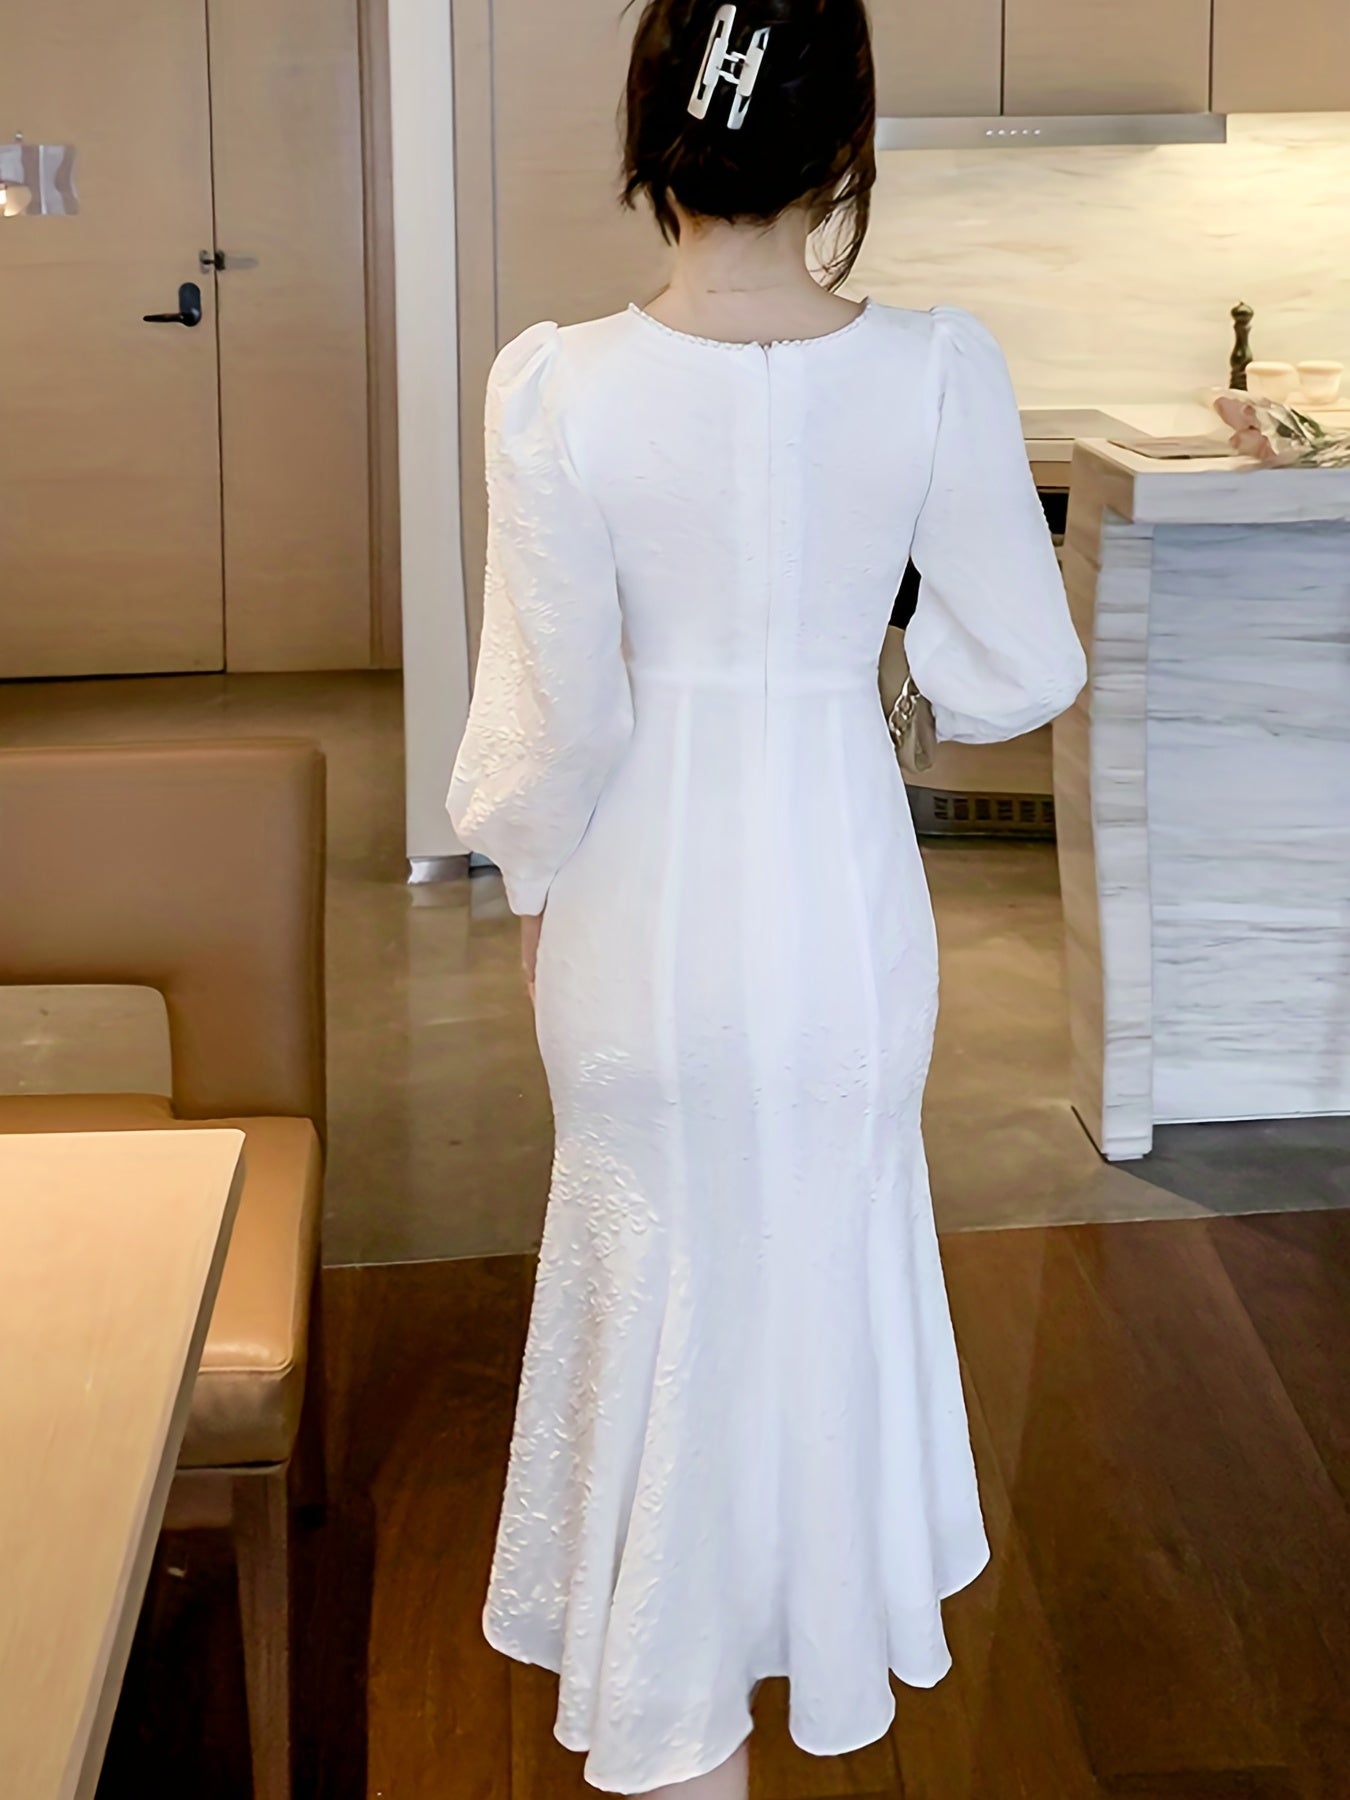 Vzyzv Squared Neck Solid Dress, Elegant Long Sleeve Mermaid Hem Evening Dress, Women's Clothing